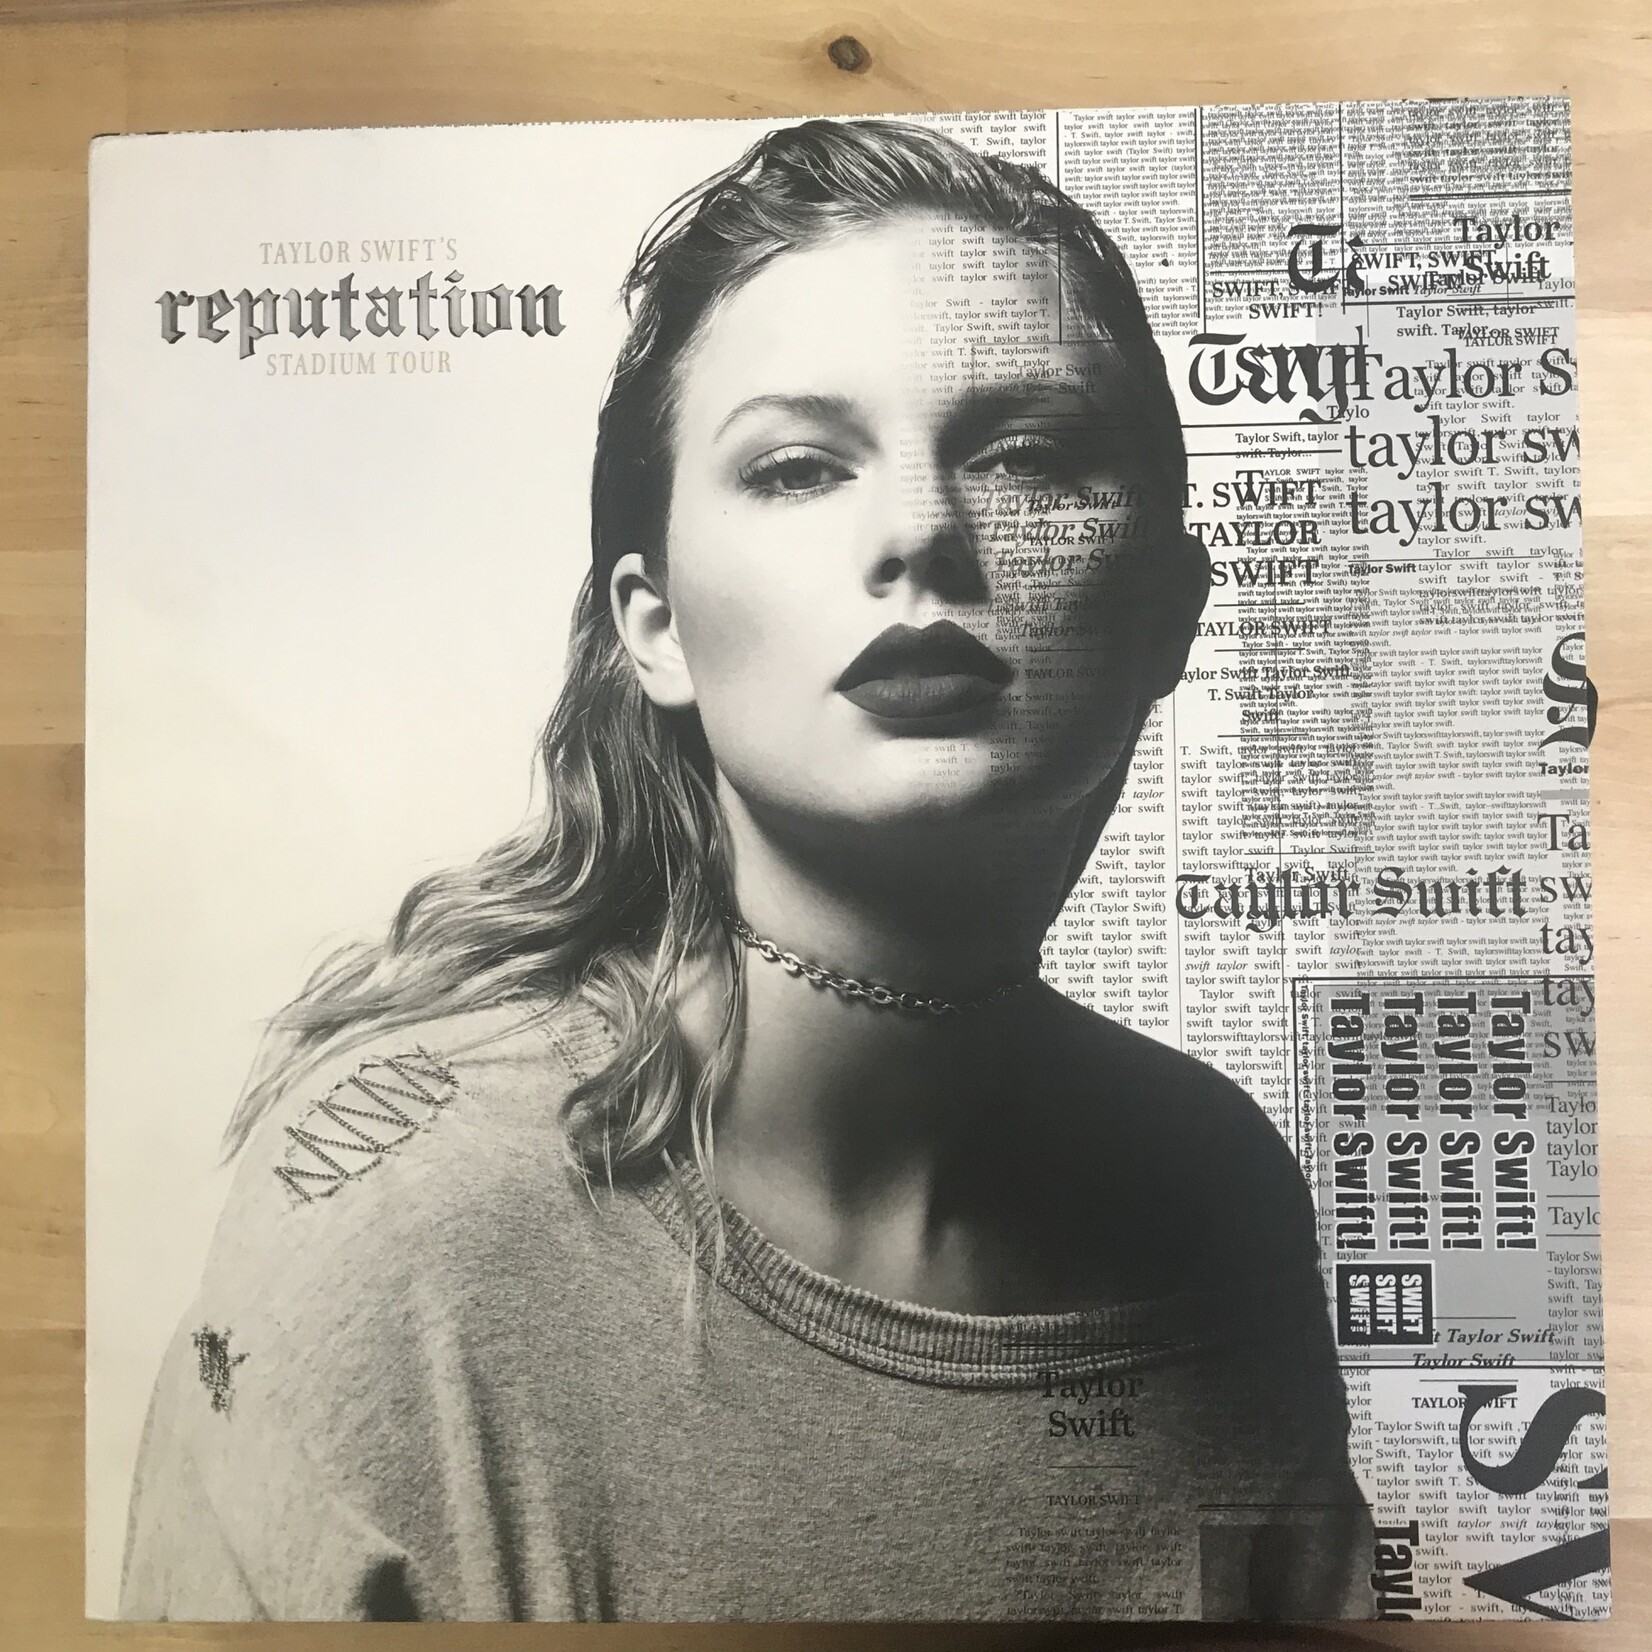 Taylor Swift - Reputation VIP Tour Box (Missing Lanyard) - CD Box Set